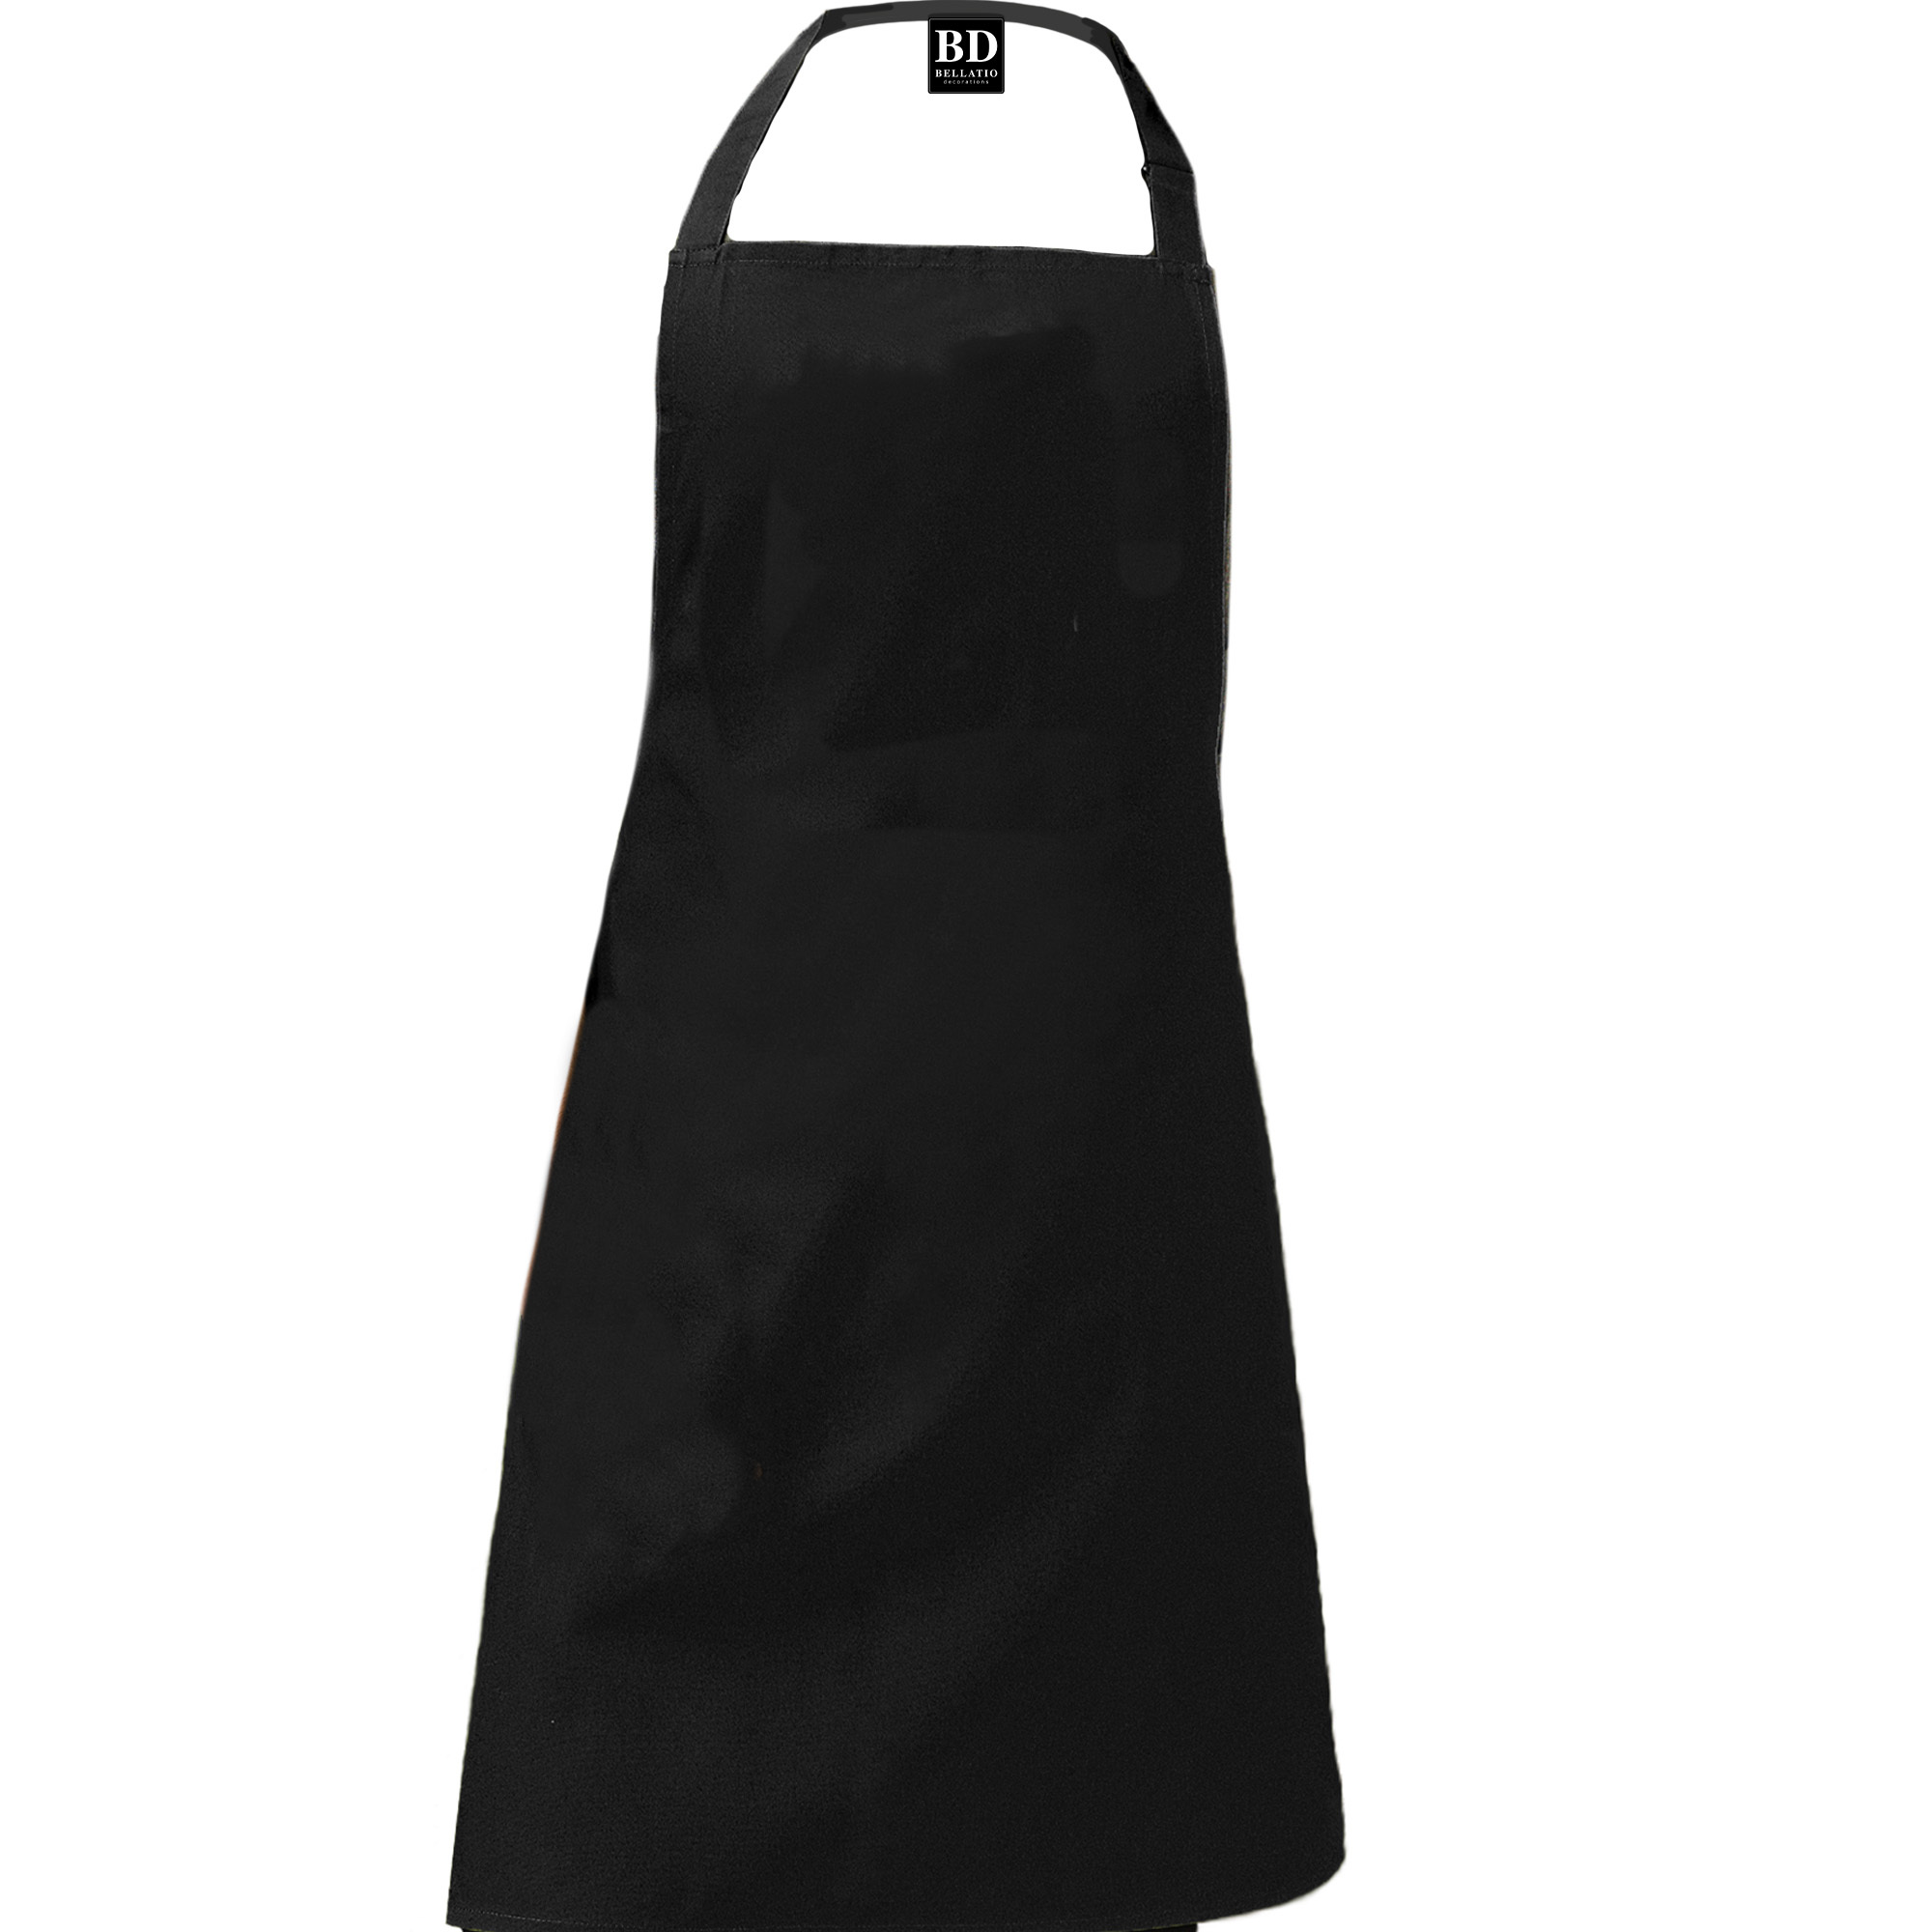 Chef pannenkoek apron black for men